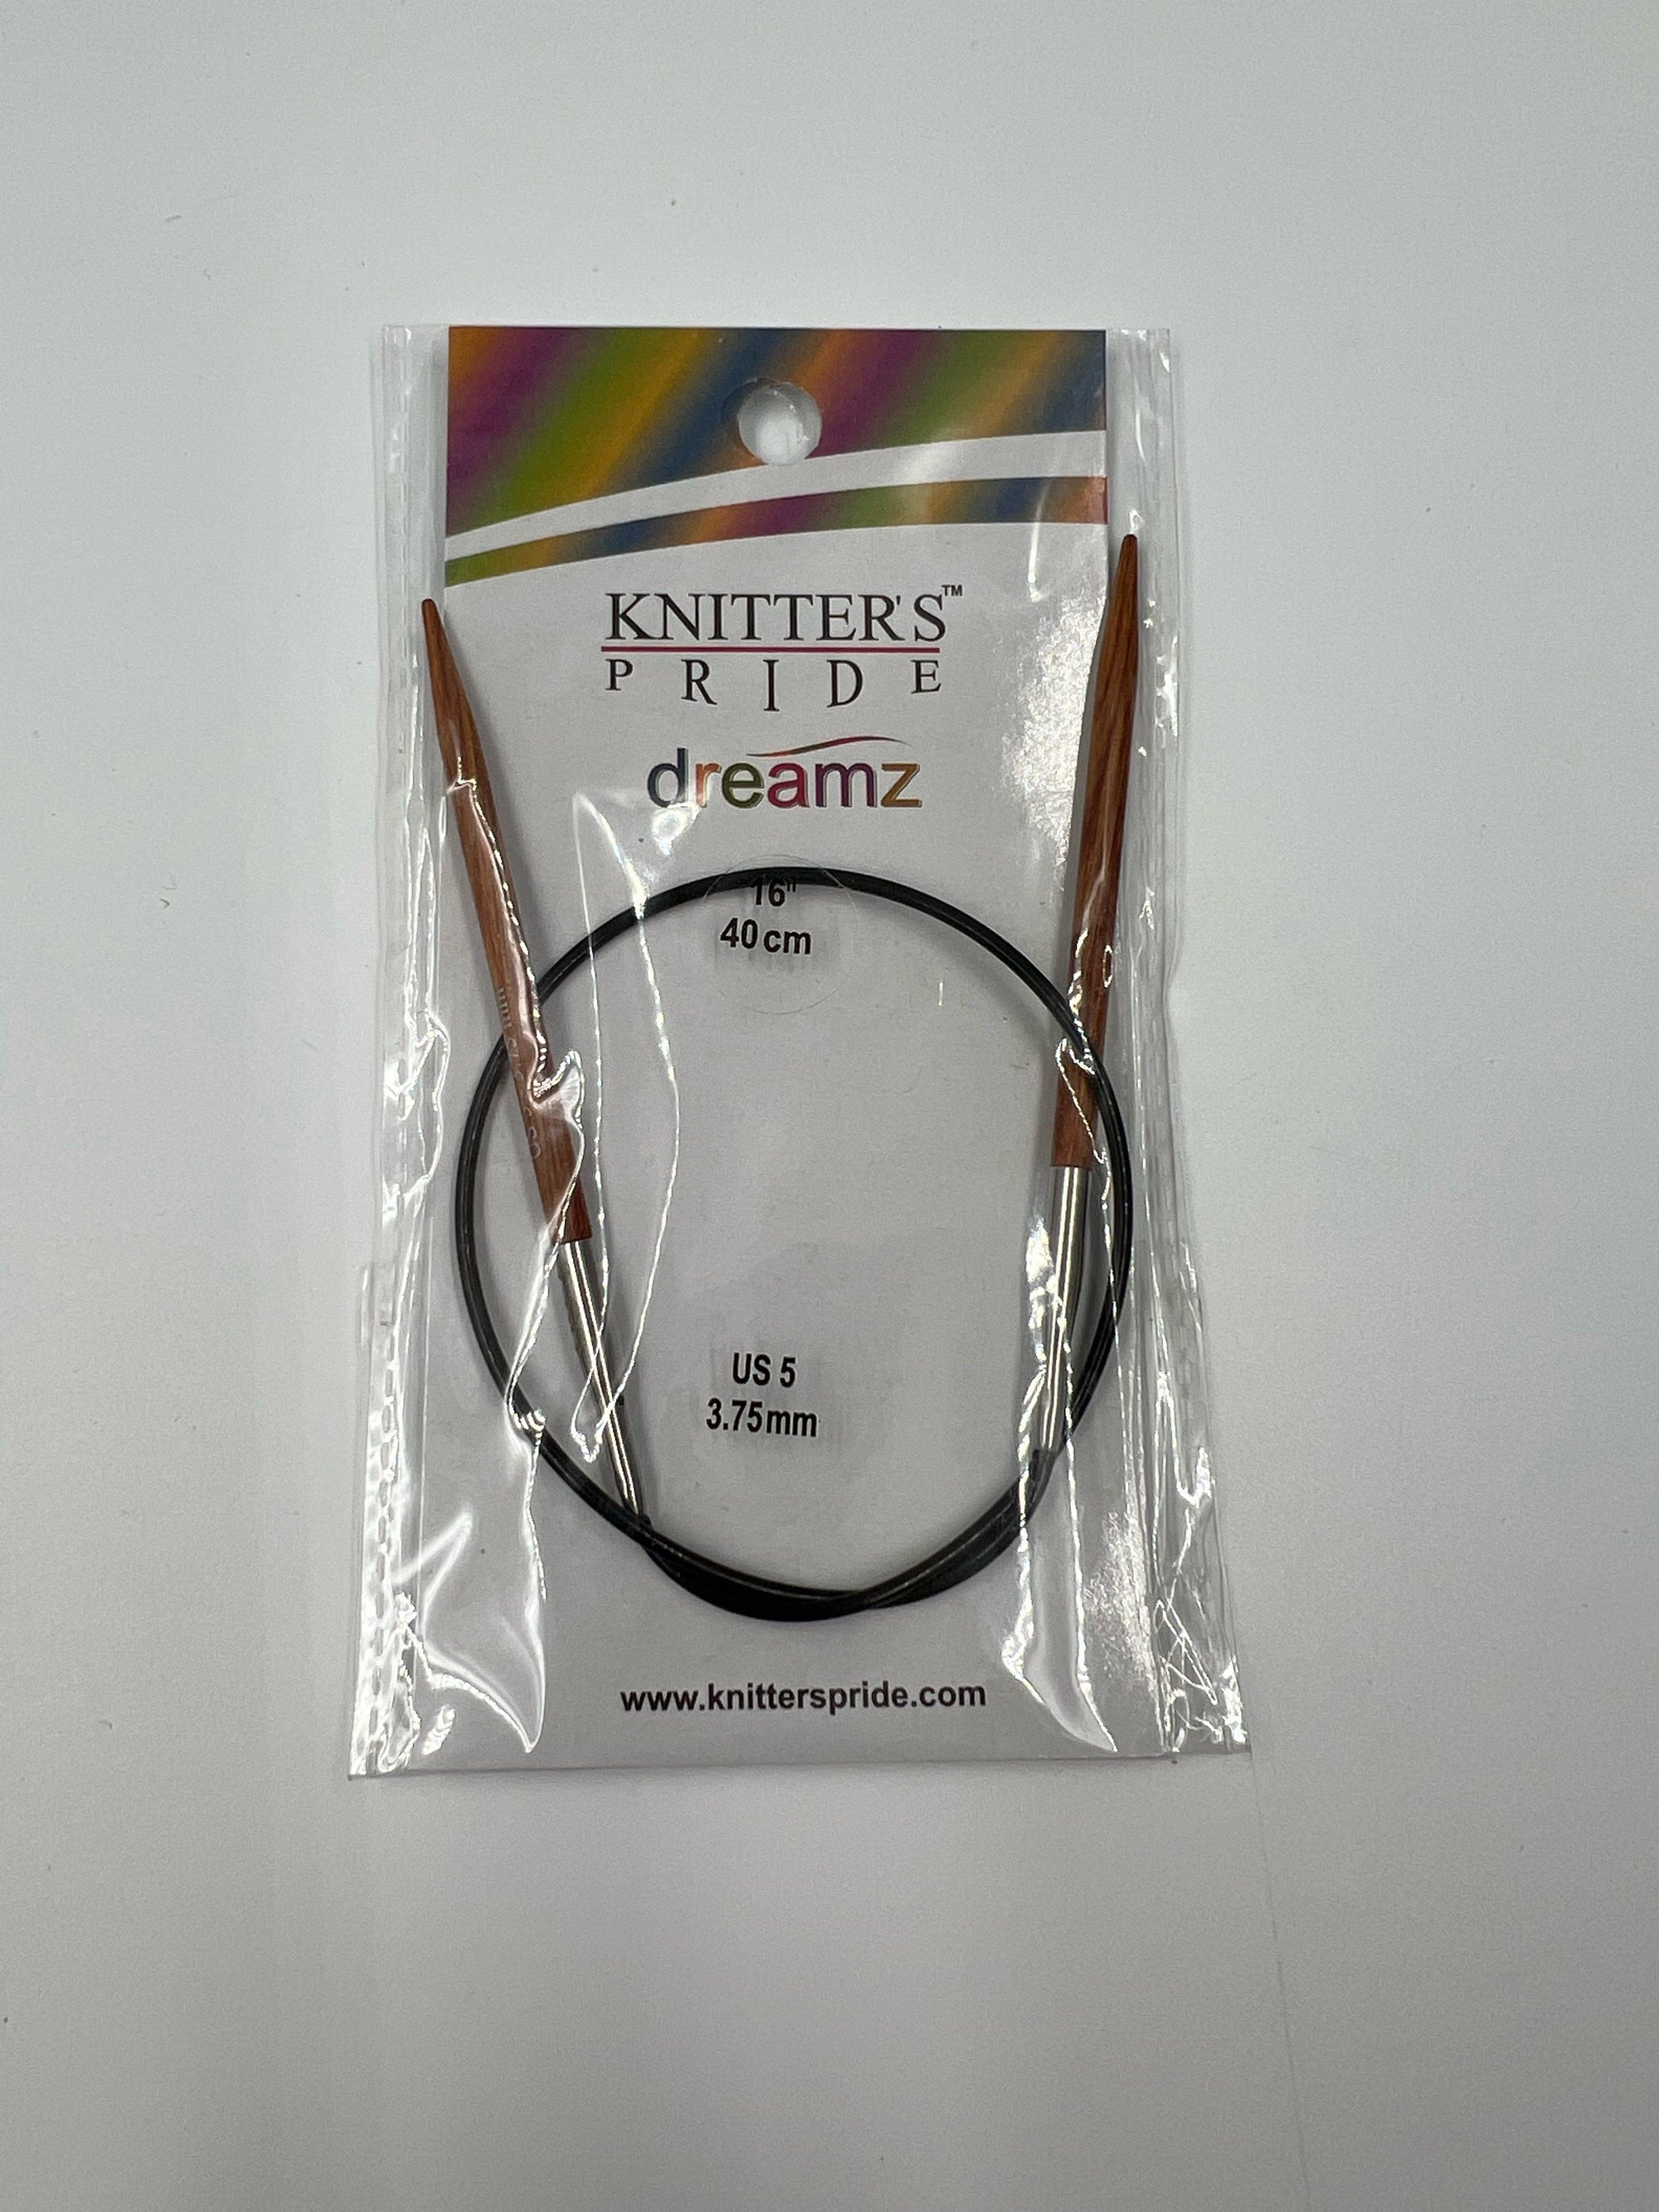 16 Inch Knitter's Pride Dreamz Circular Needles